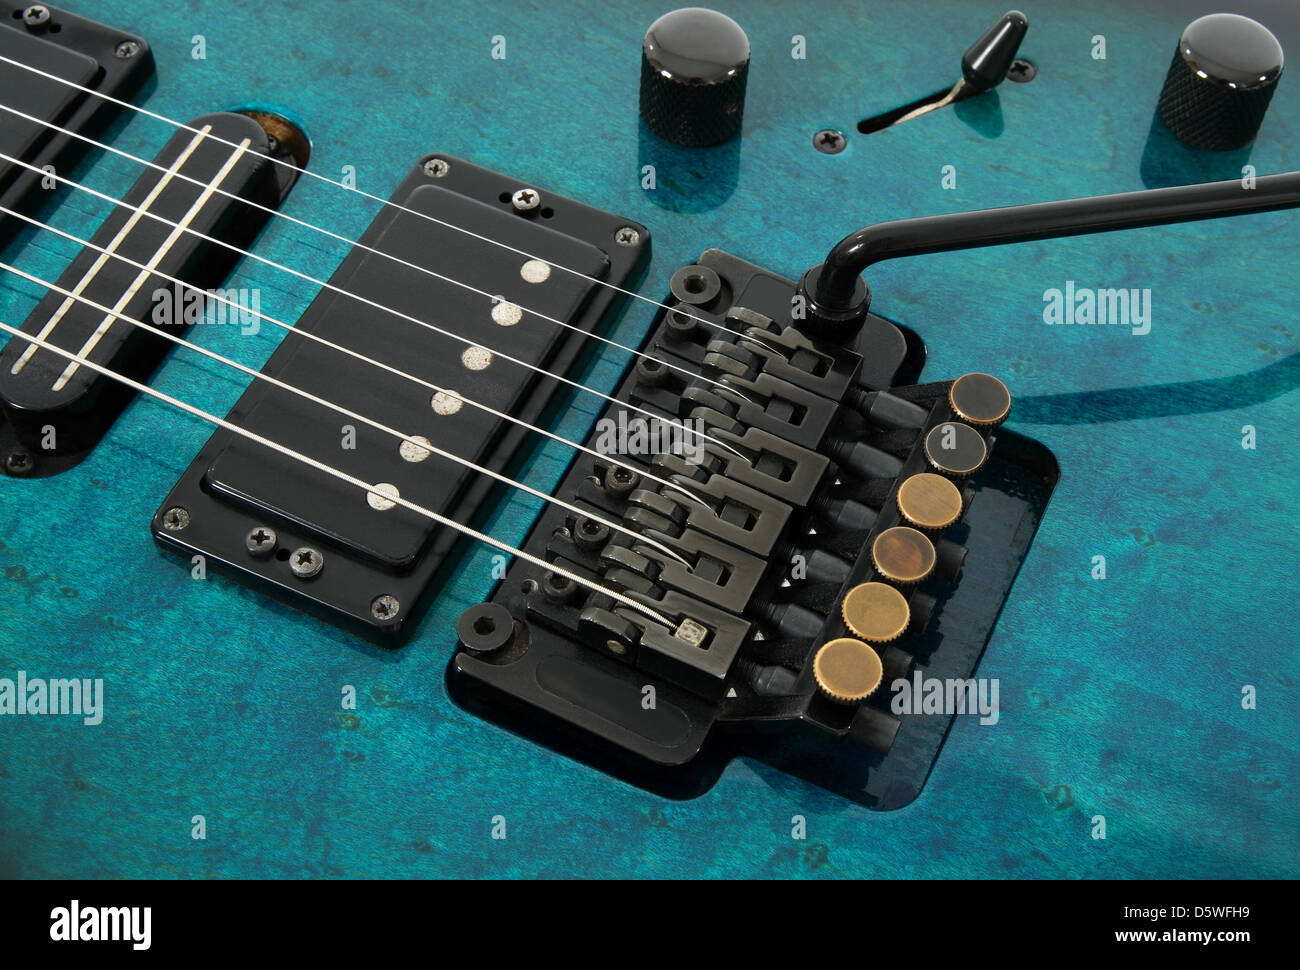 E-Gitarren-Tremolo-System und Pickups Stockfotografie - Alamy